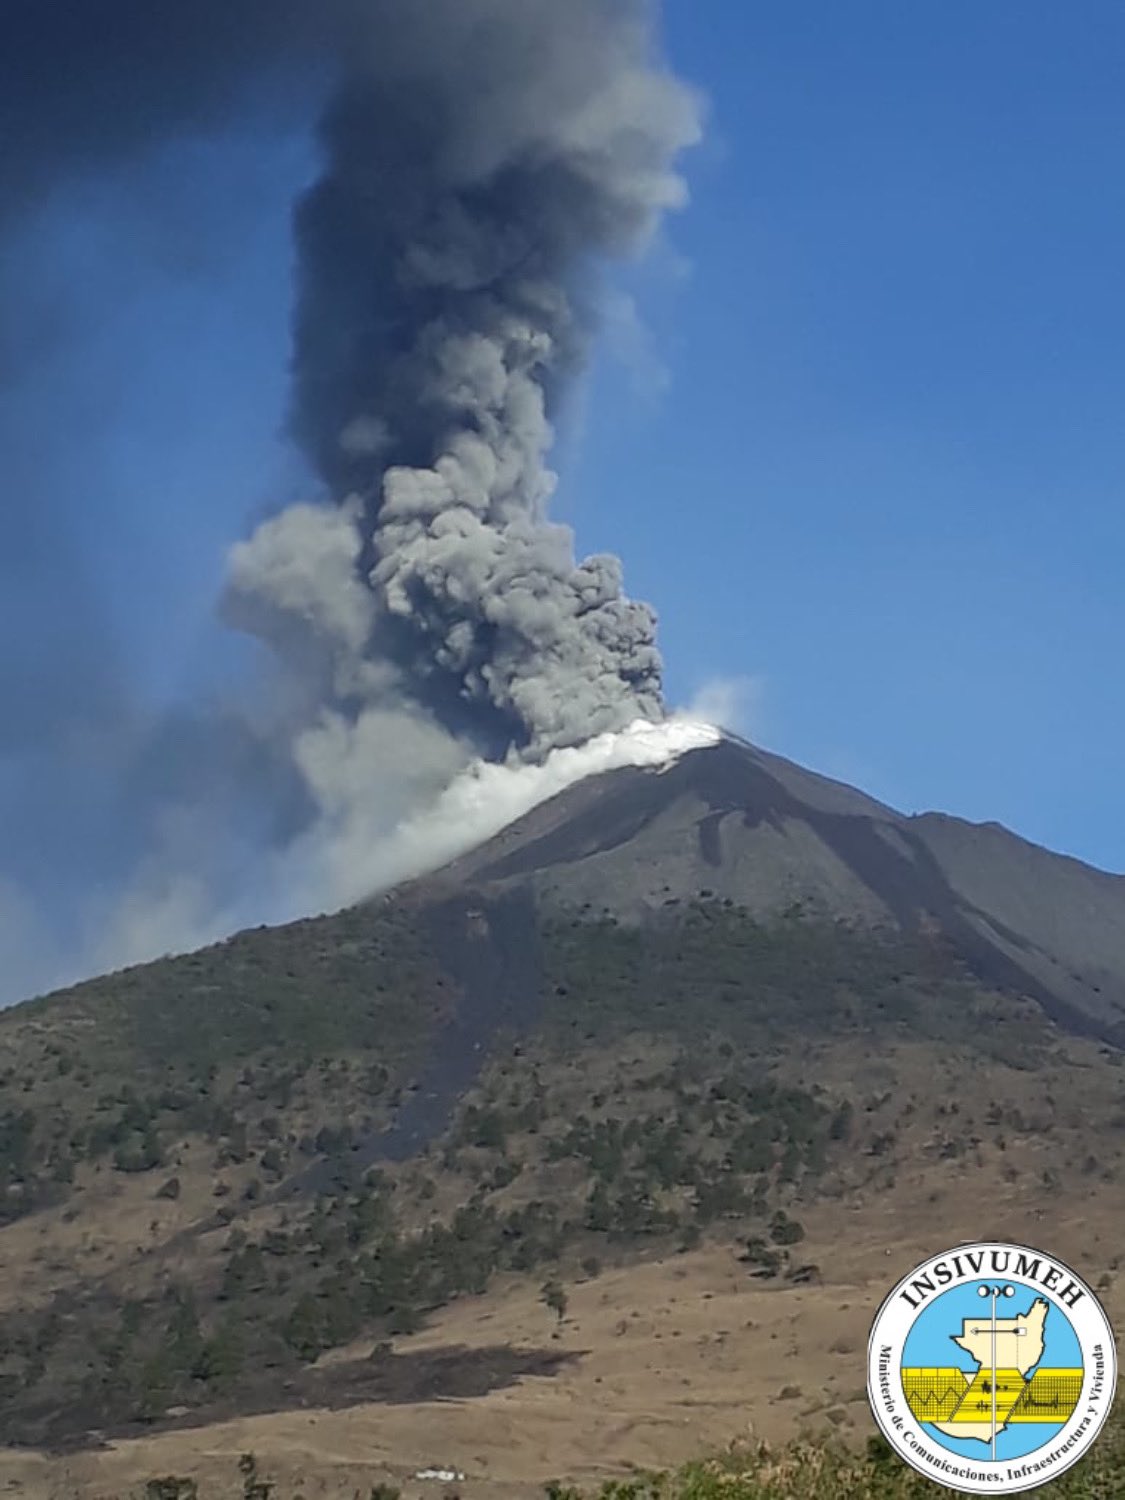 Pacaya volcano (Guatemala) eruption with impressive volcanic lightning